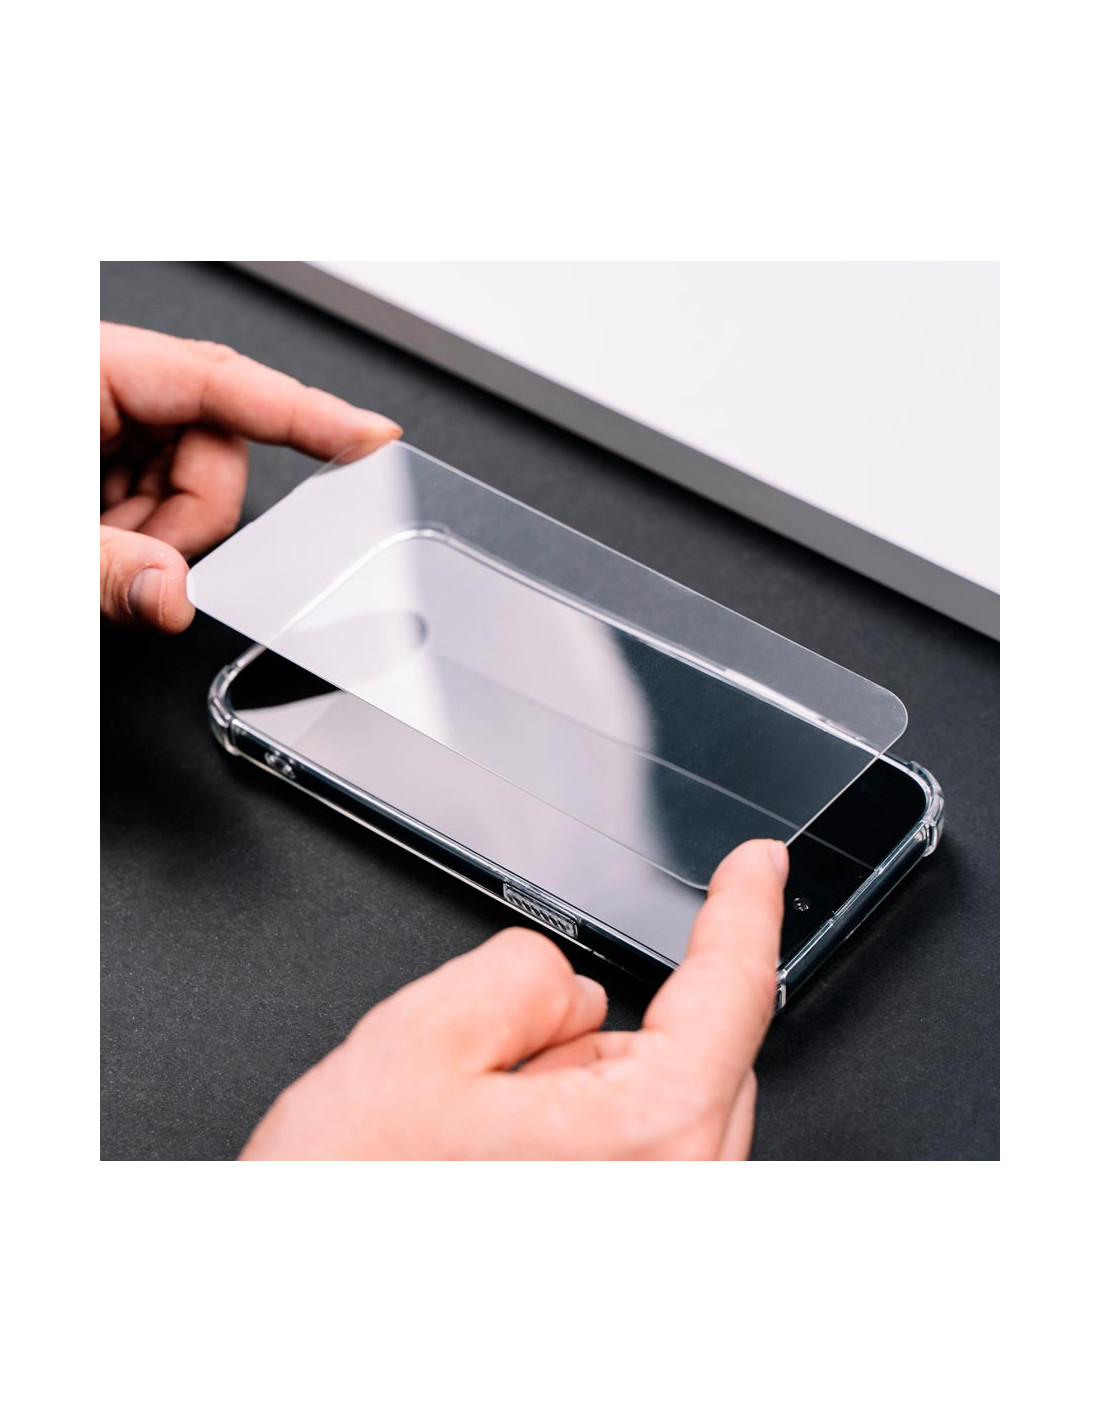 Protector de pantalla de cristal templado para iPhone 11 Pro Max.